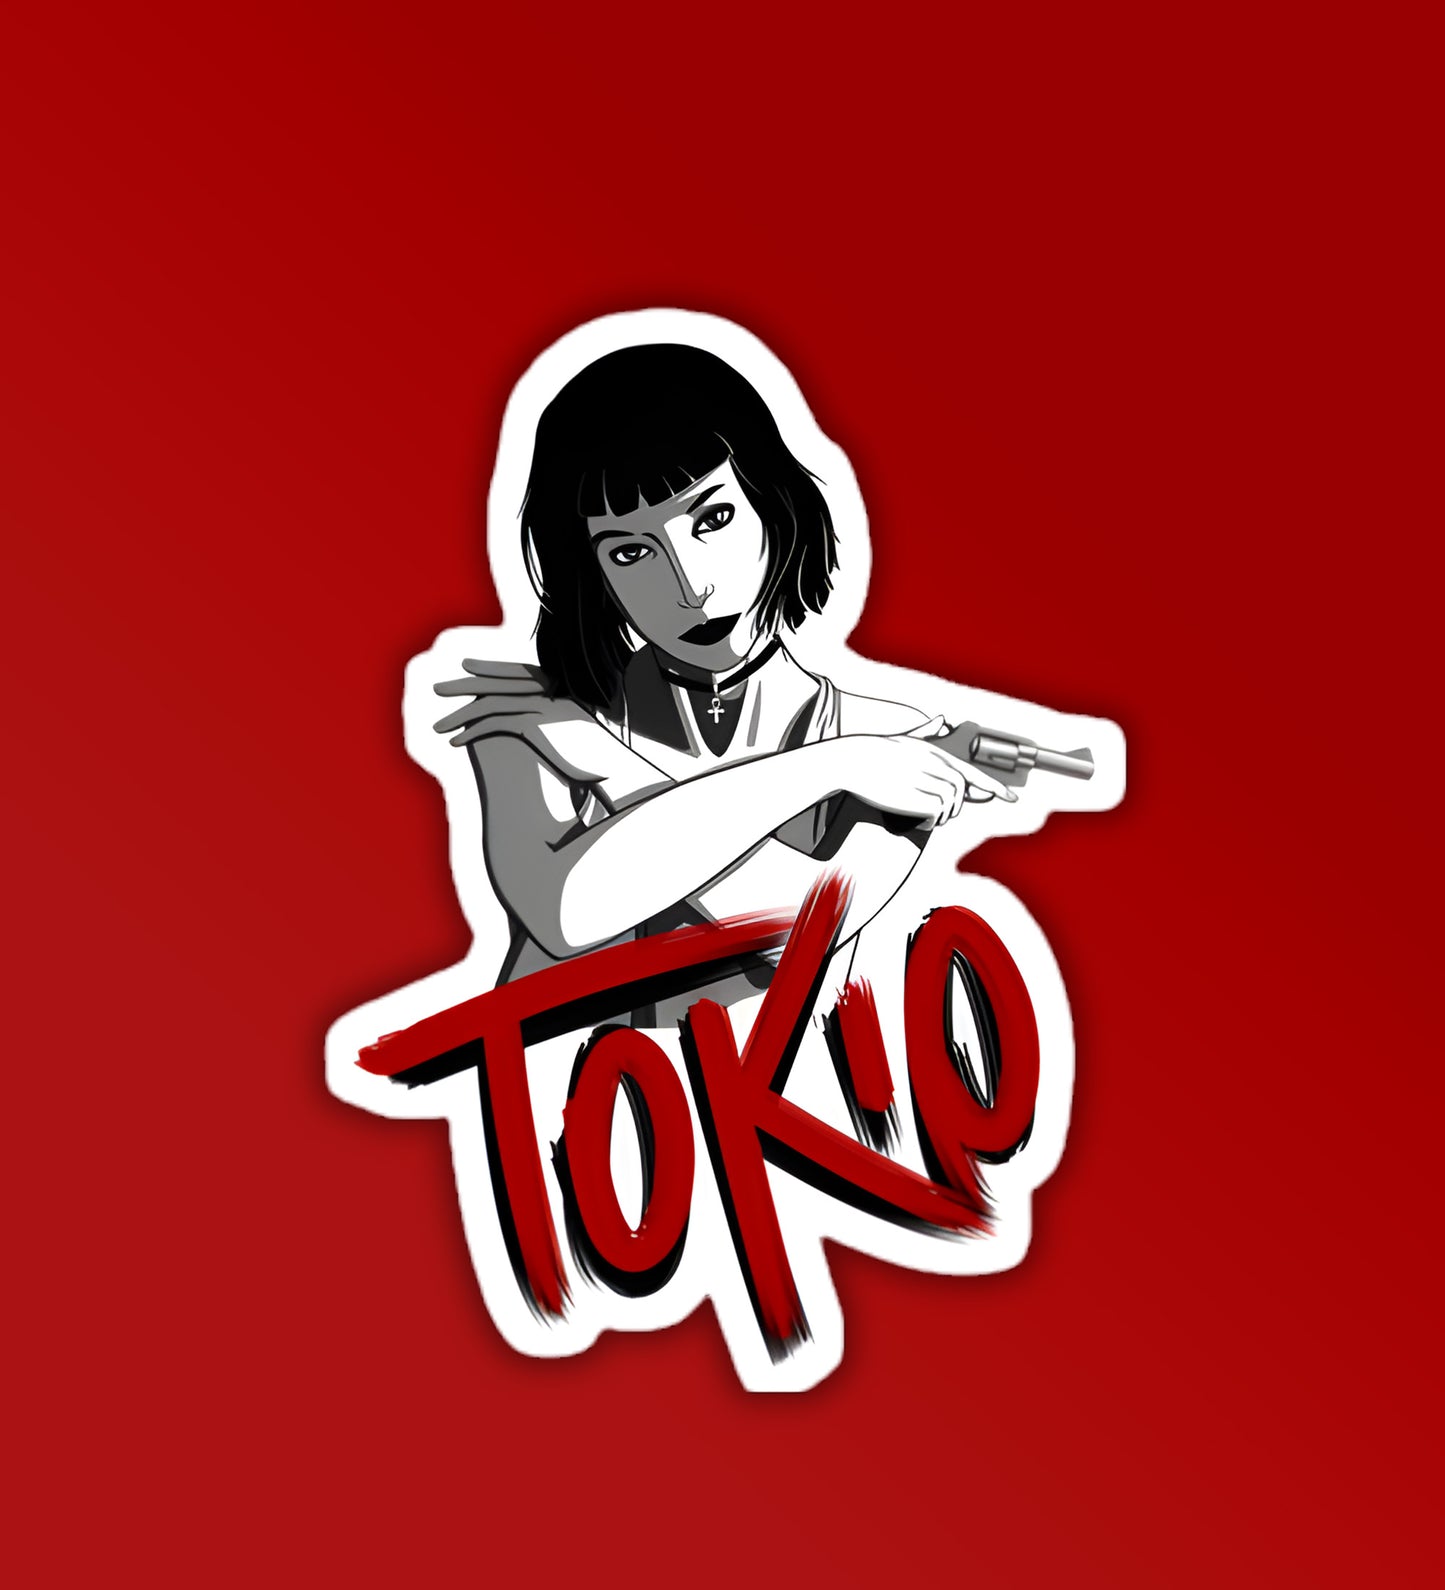 Tokio - Money Heist - Laptop / Mobile Sticker